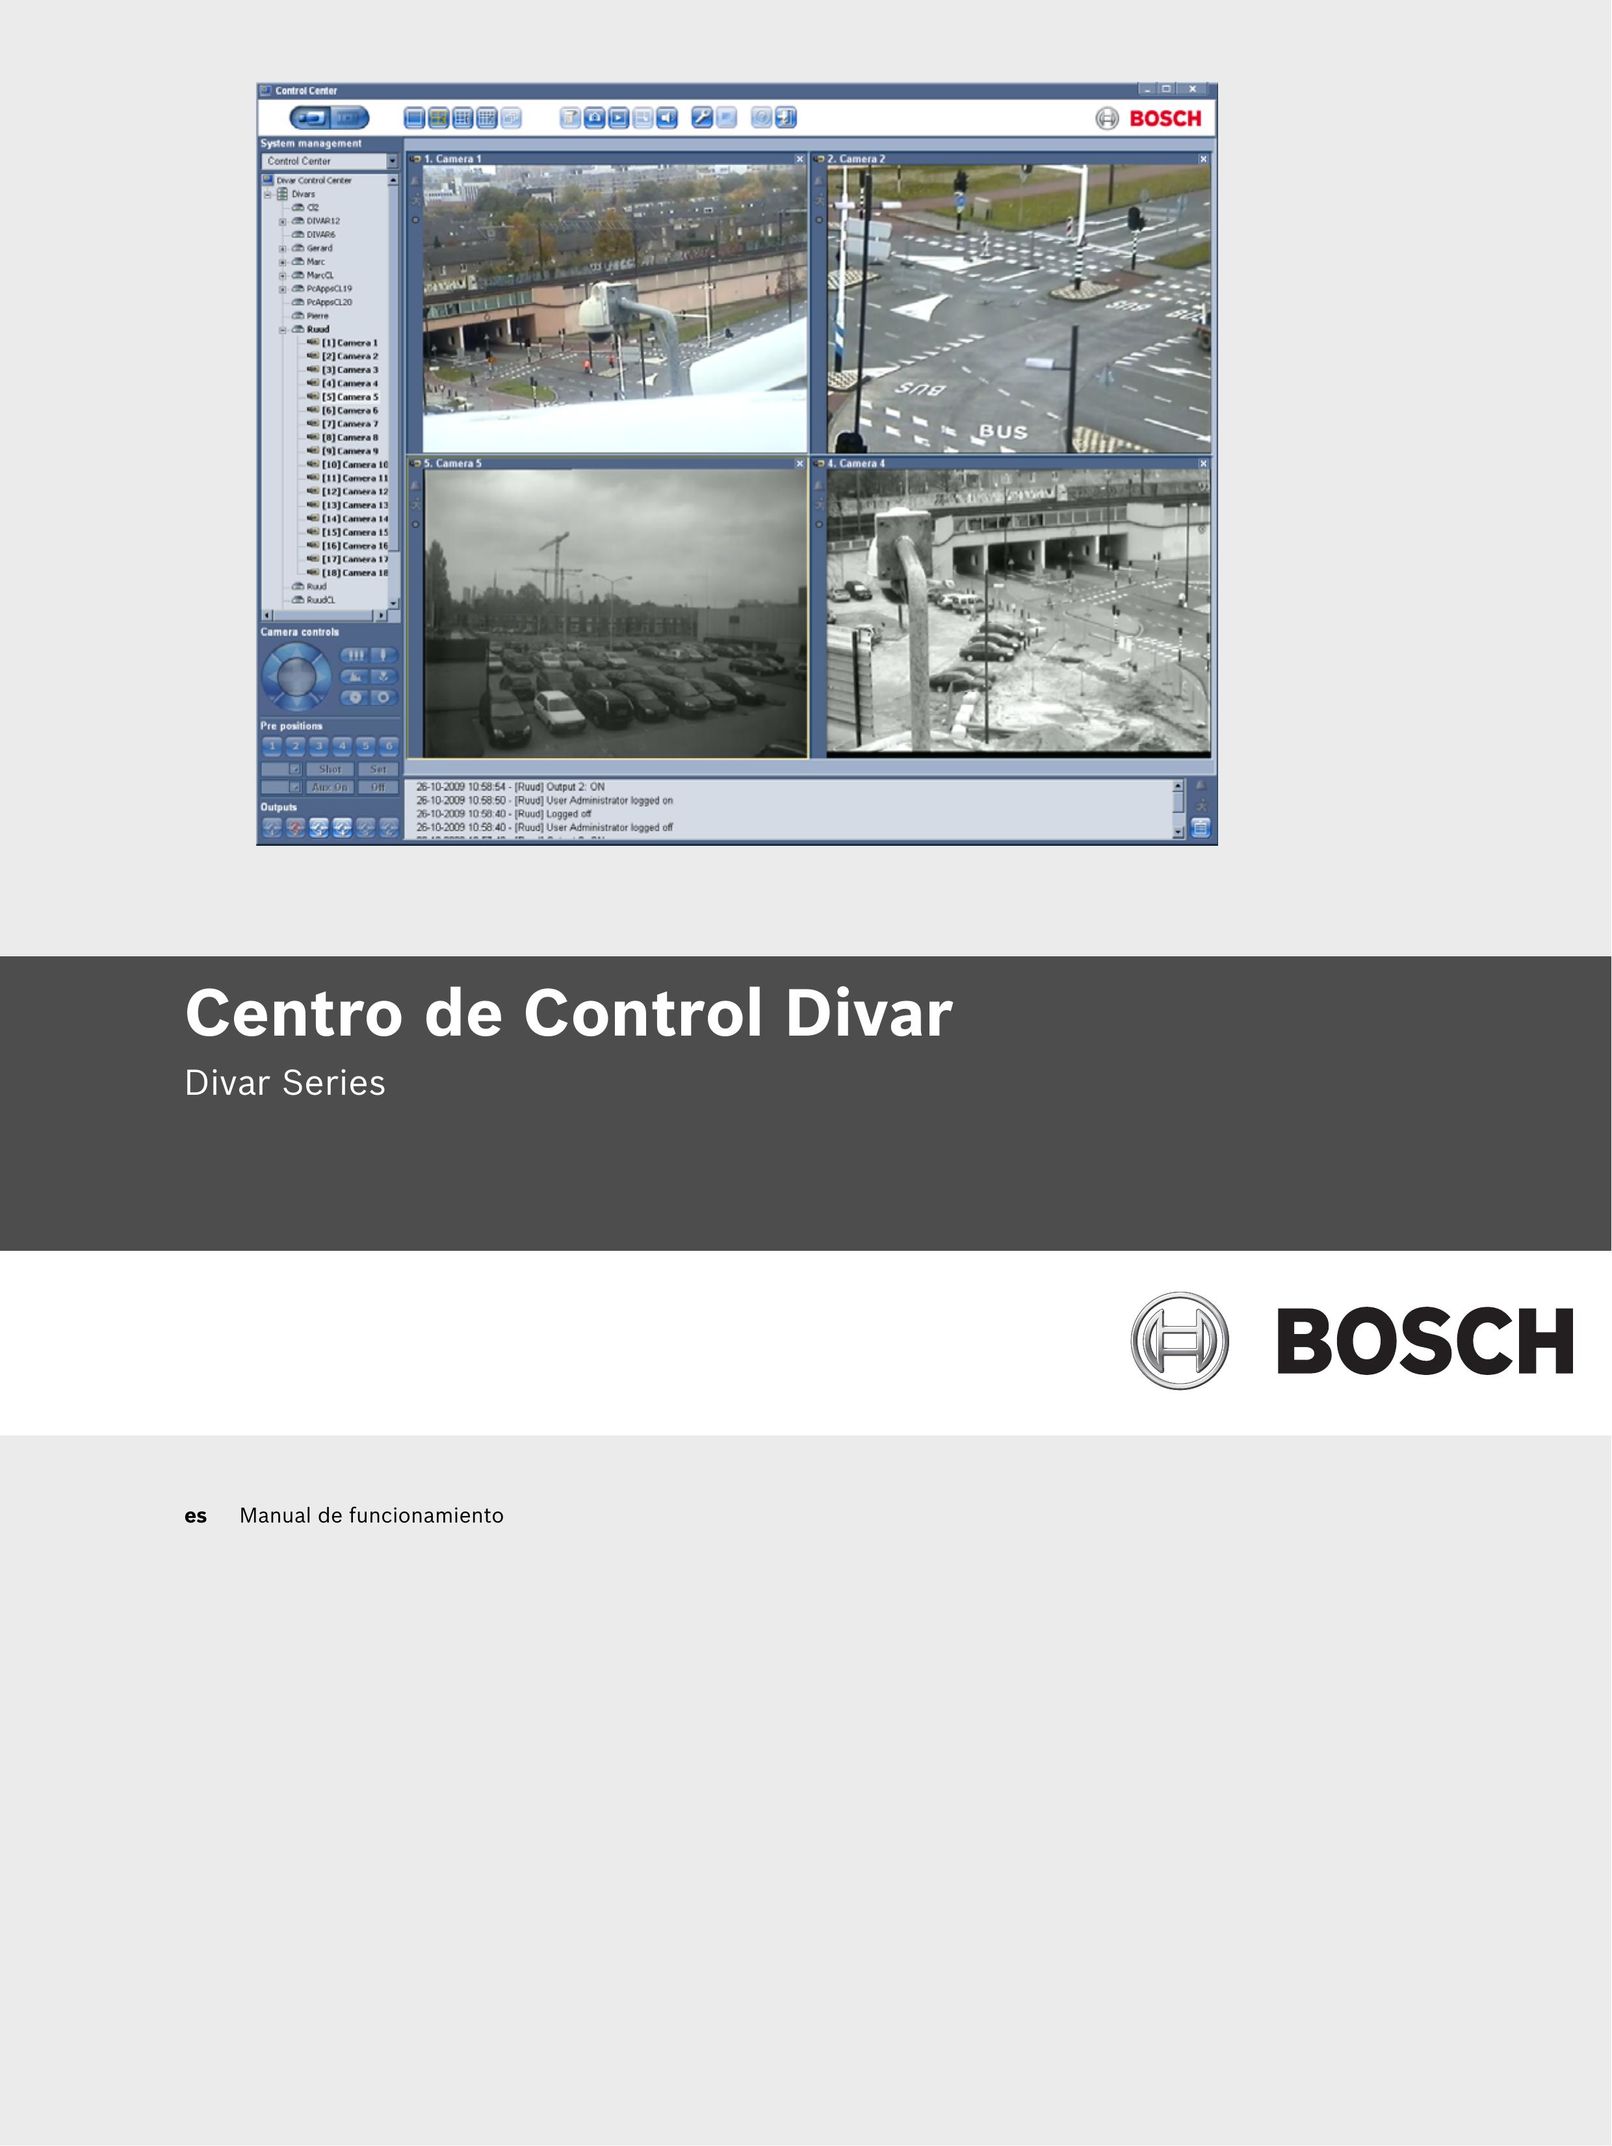 Bosch Appliances AR18-09-B014 Home Security System User Manual